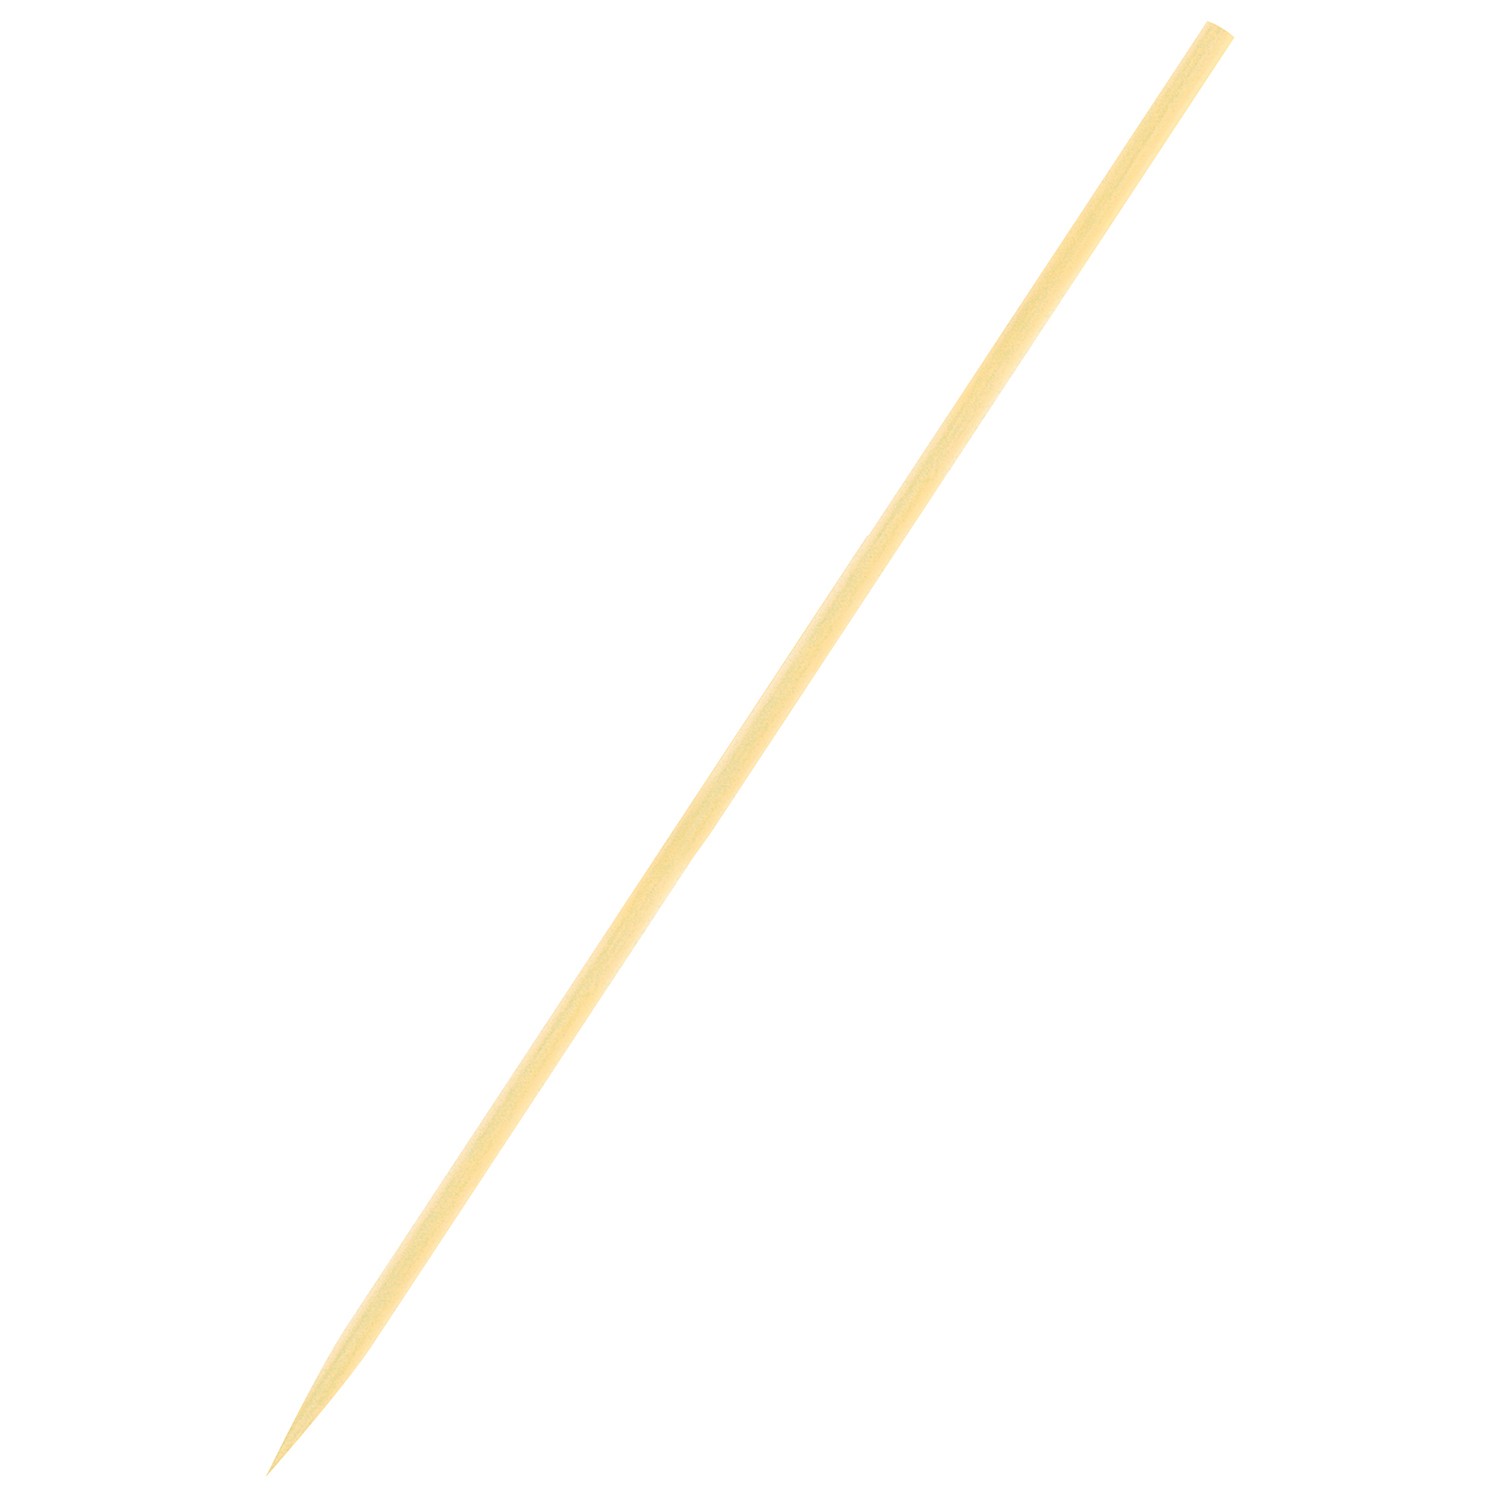 Bambusové špajdle ostré 15 cm, Ø 2,5 mm [200 ks]